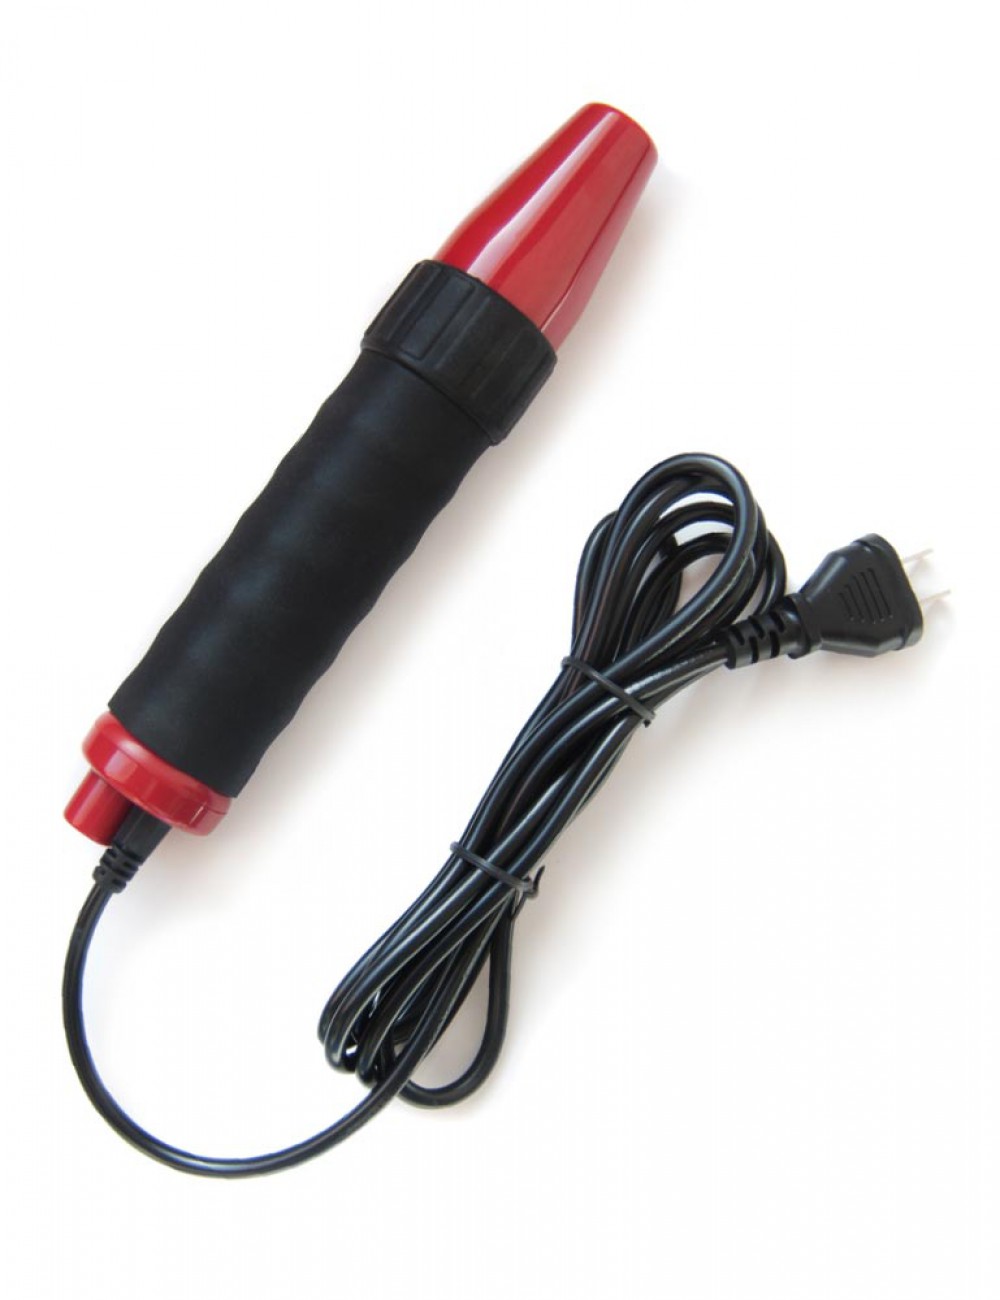 NEON WAND ELECTROSEX KIT RED HANDLE PURPLE ELECTRODE